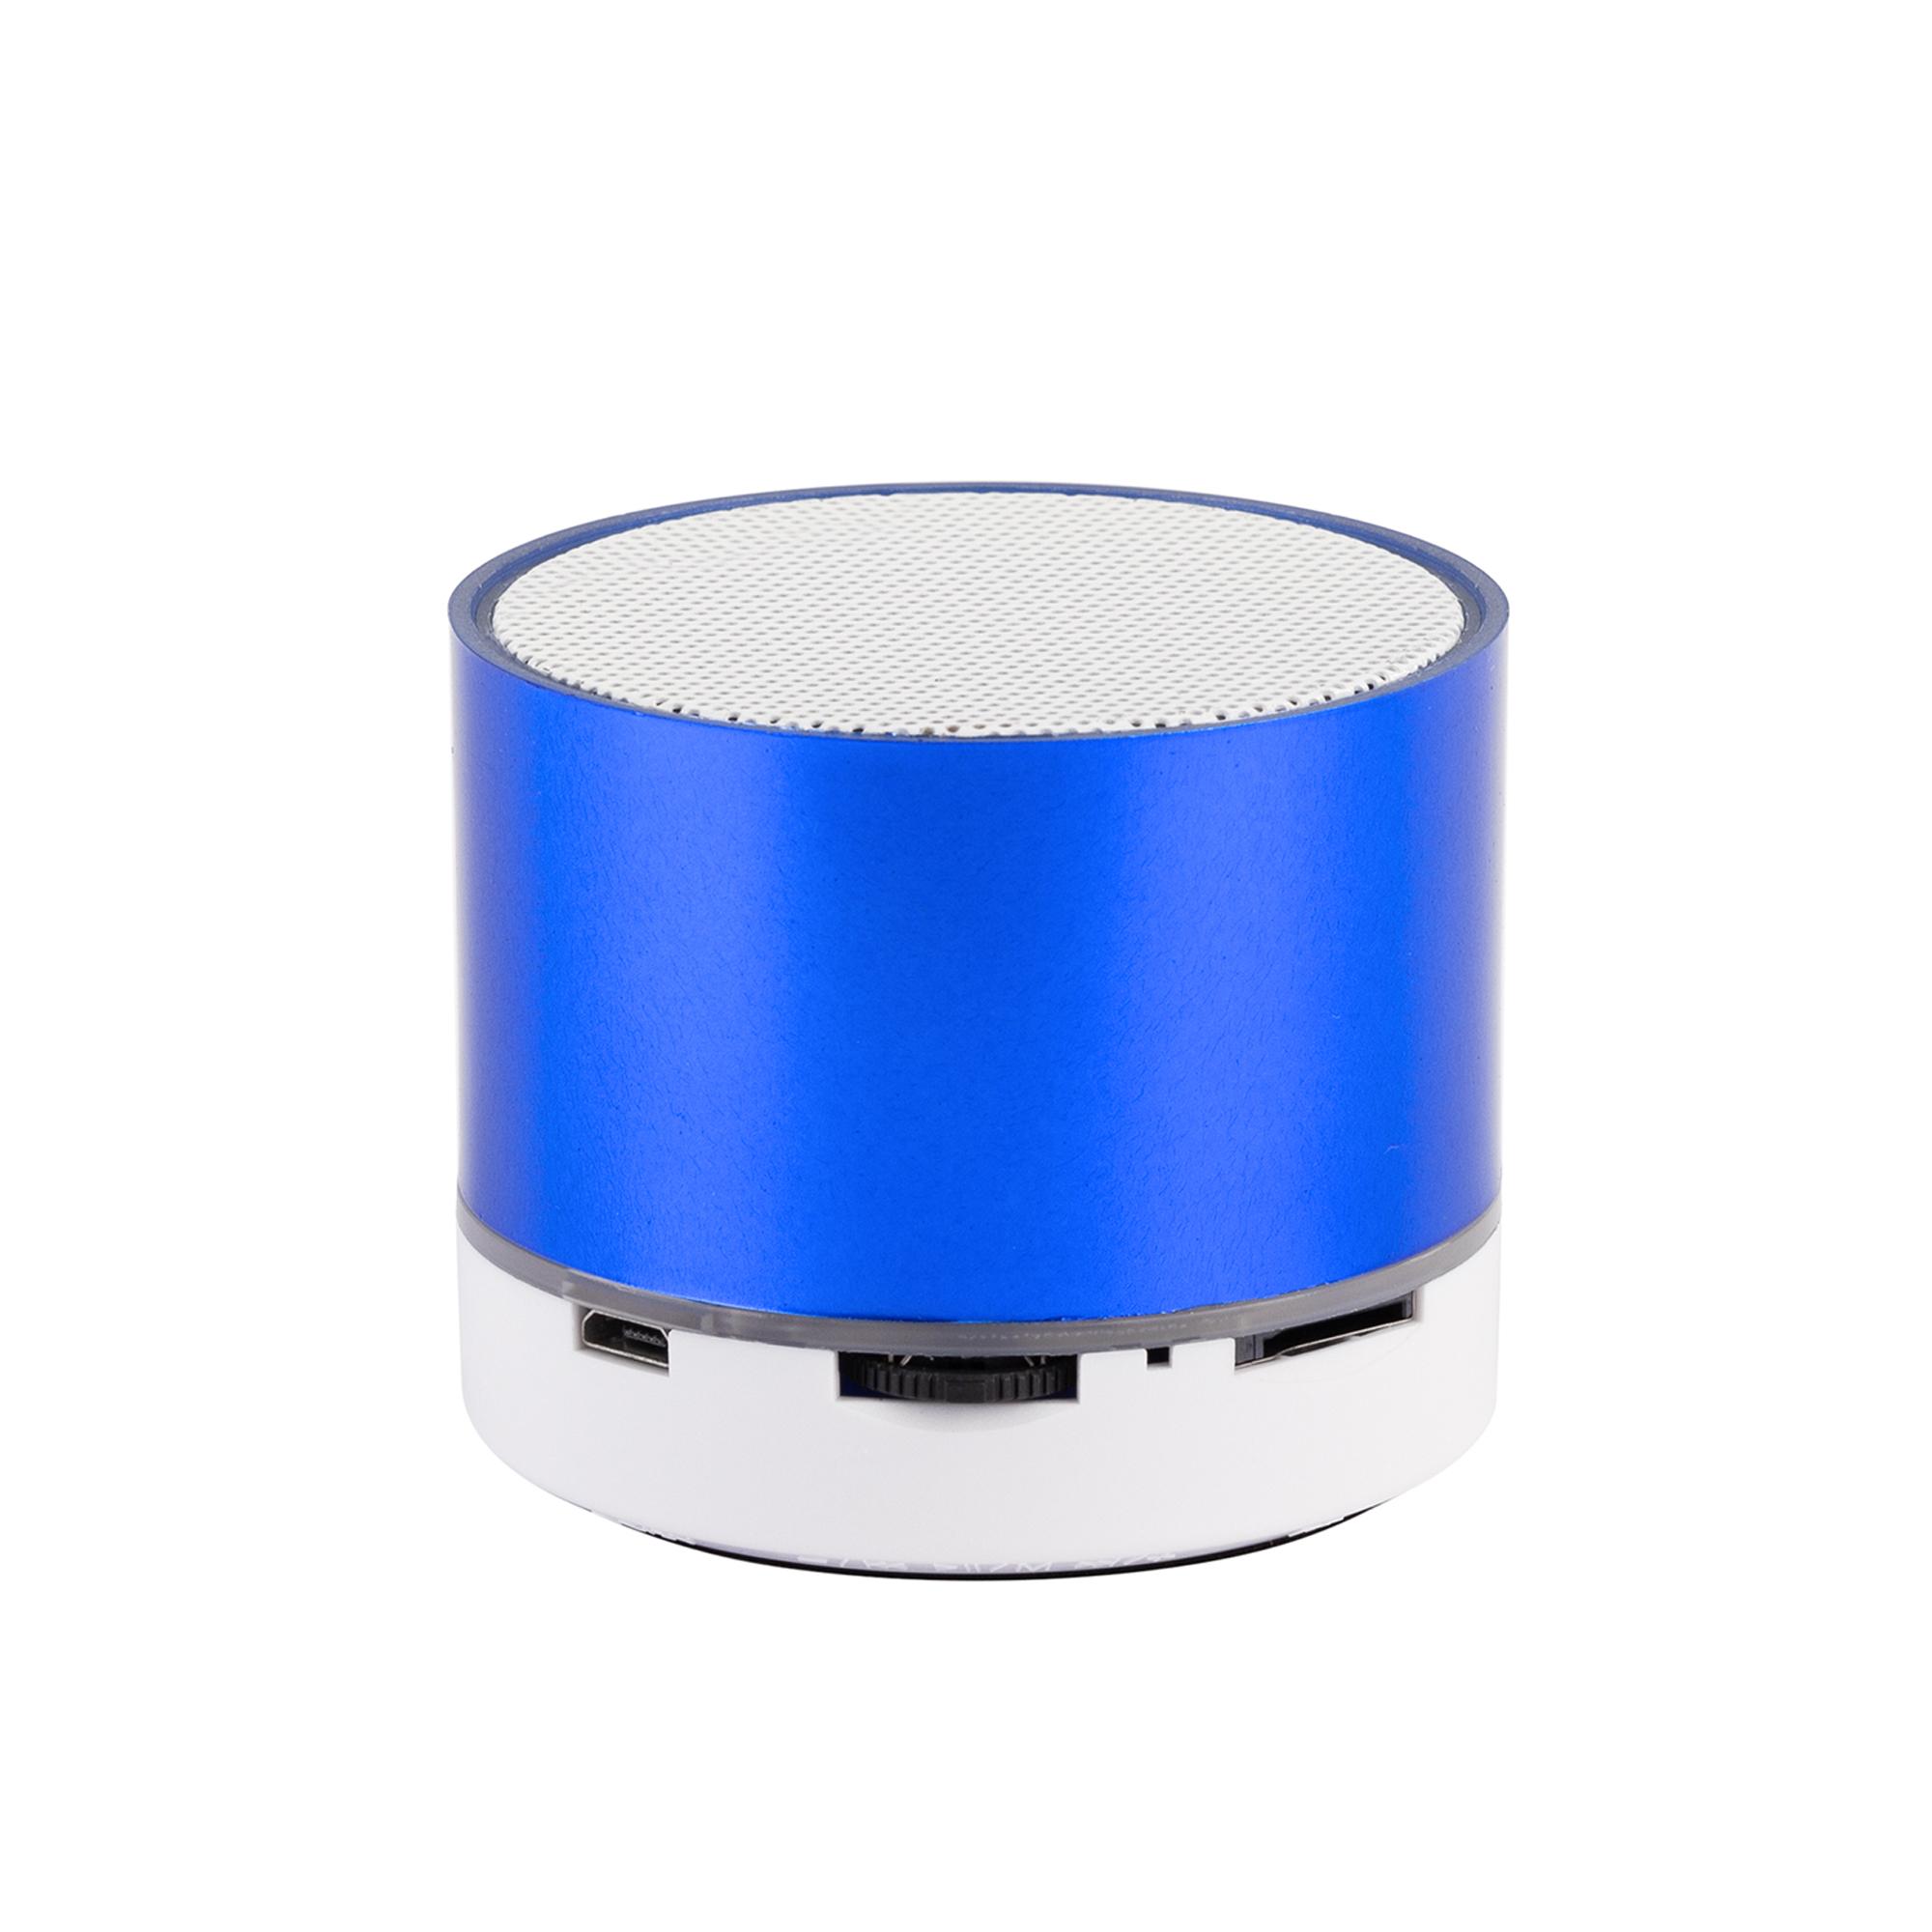 Bluetooth колонка "Party" с подсветкой логотипа, цвет синий